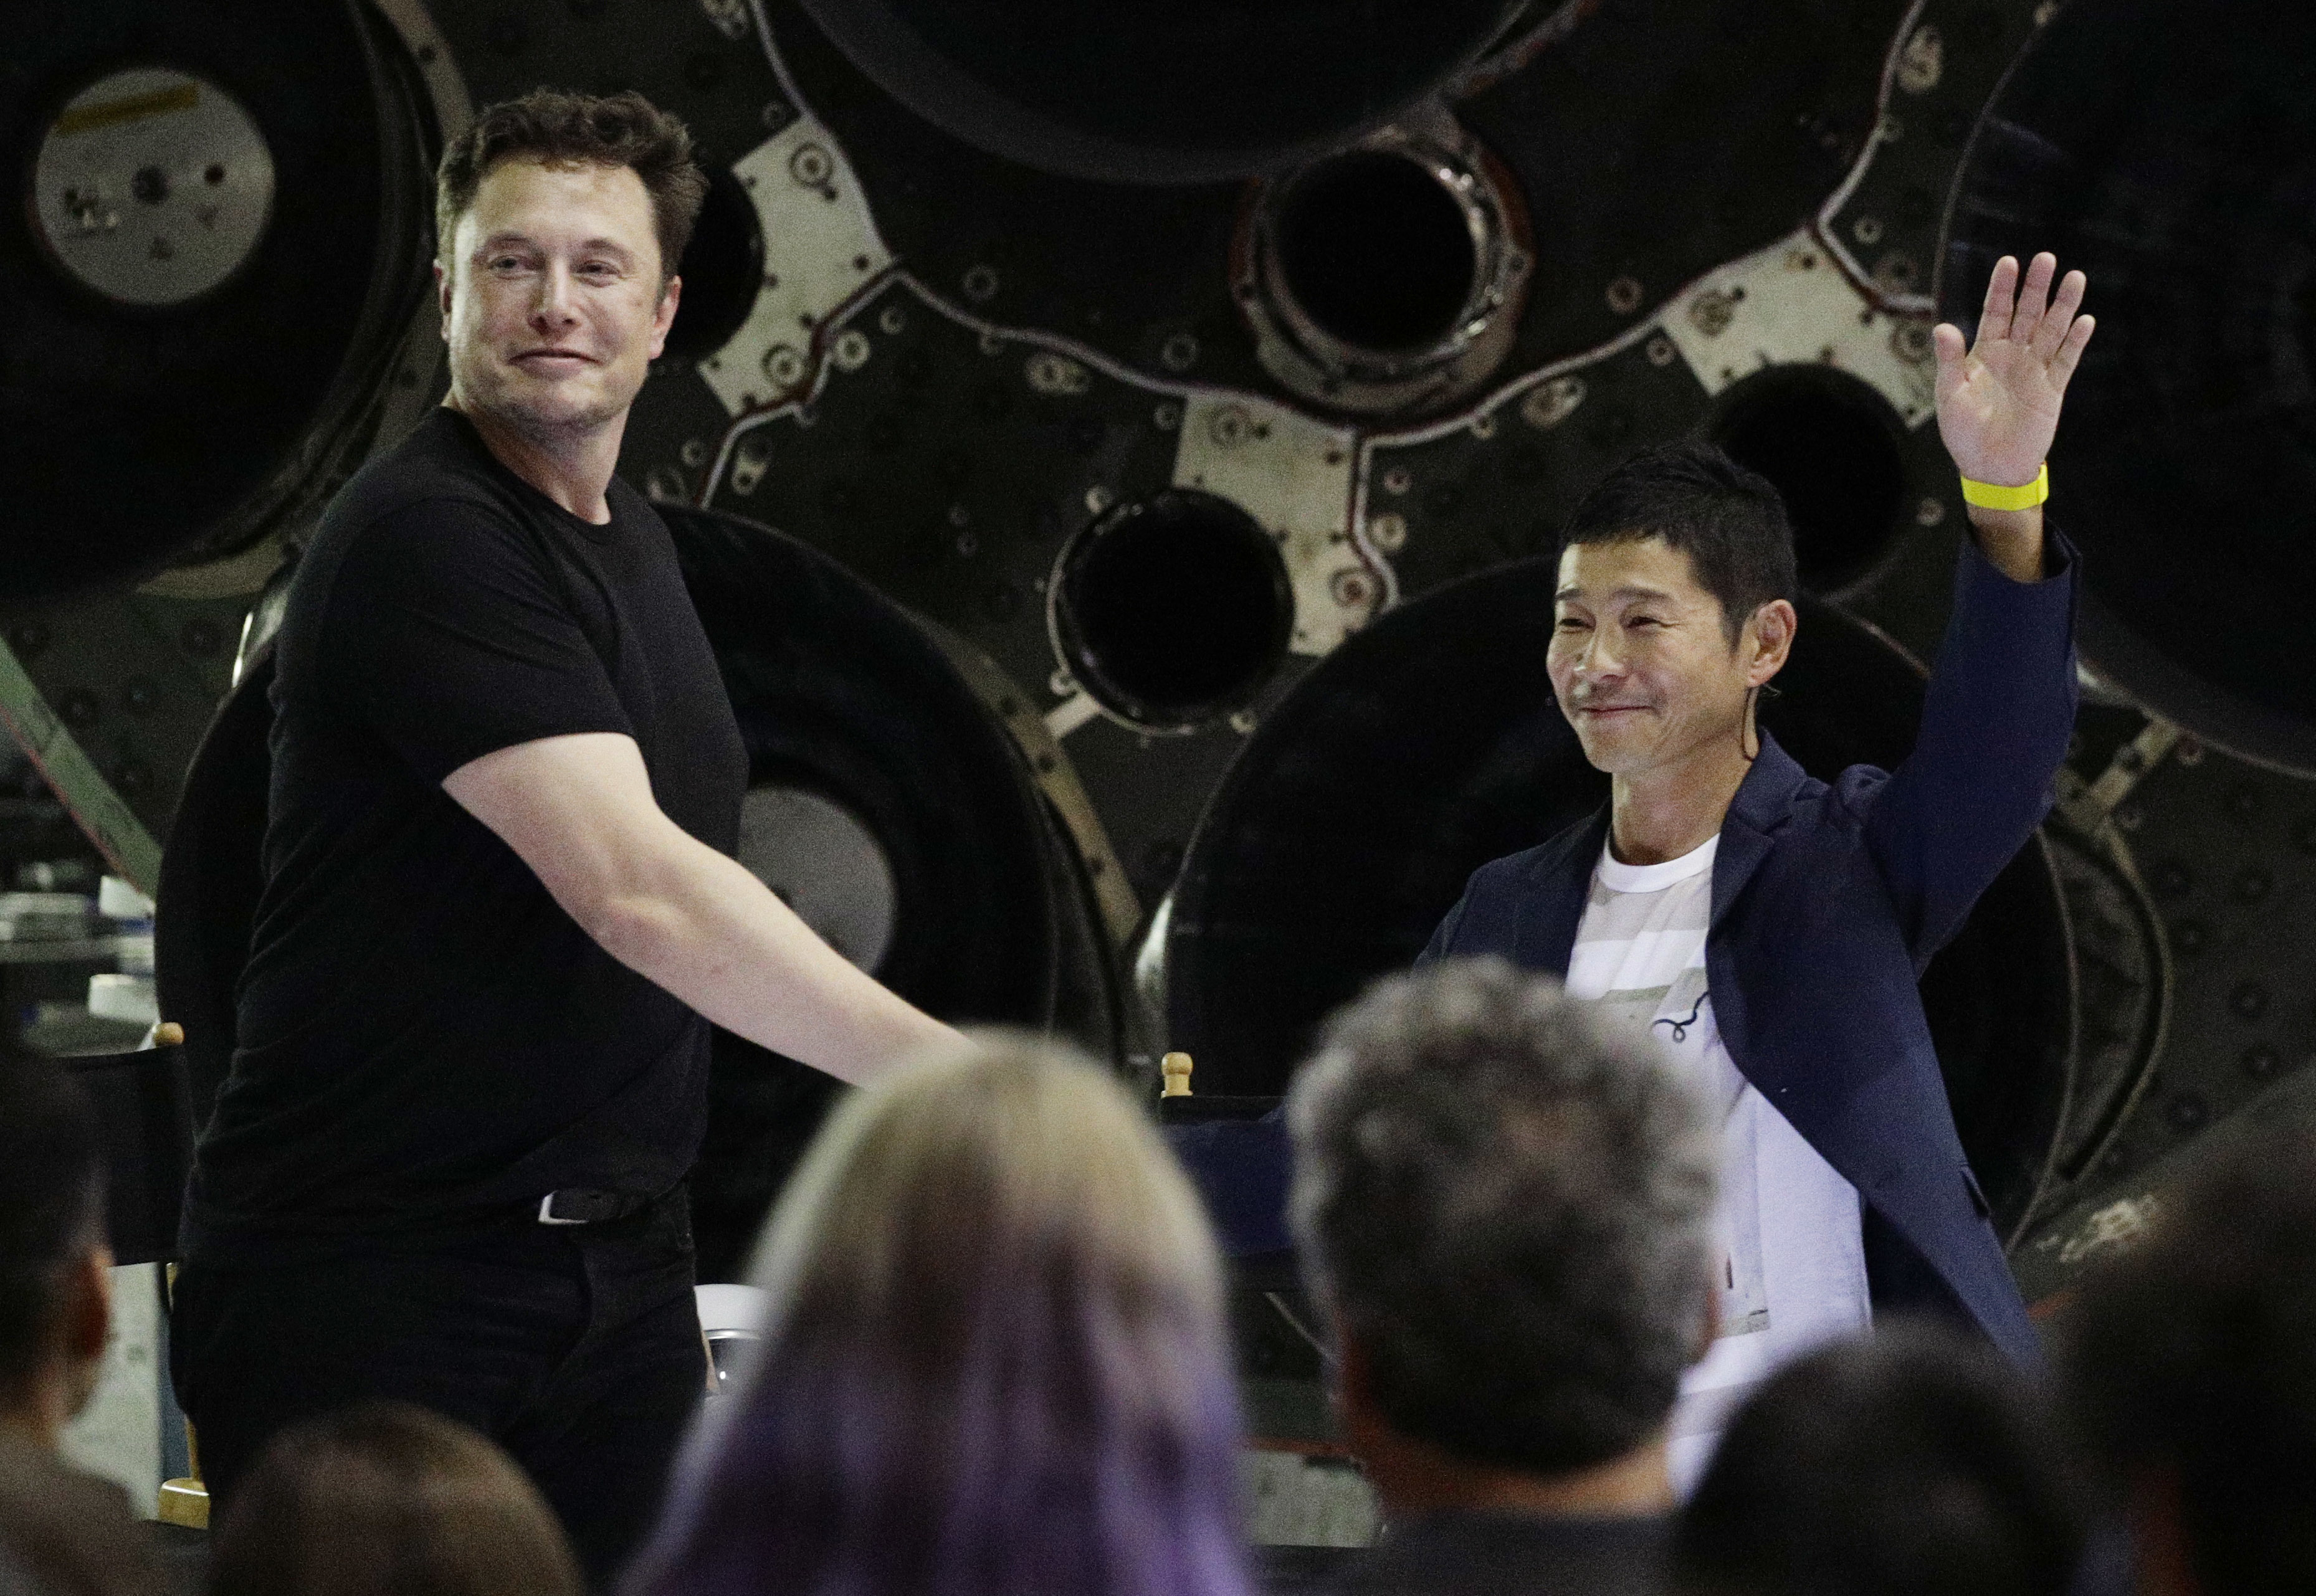 Elon Musk, SpaceX